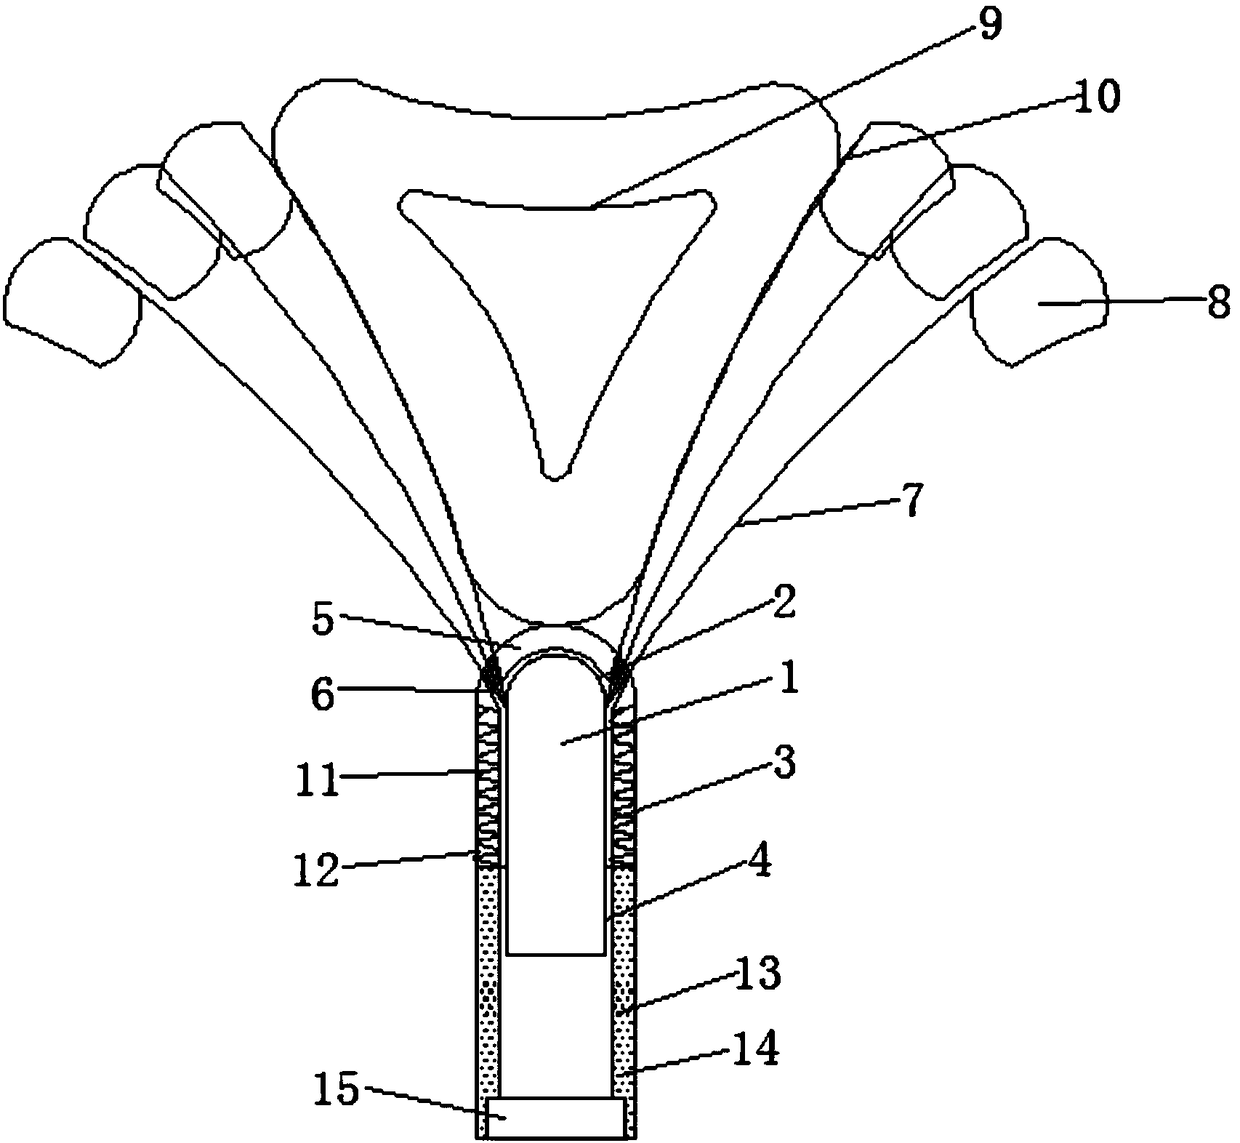 An adjustable intrauterine device